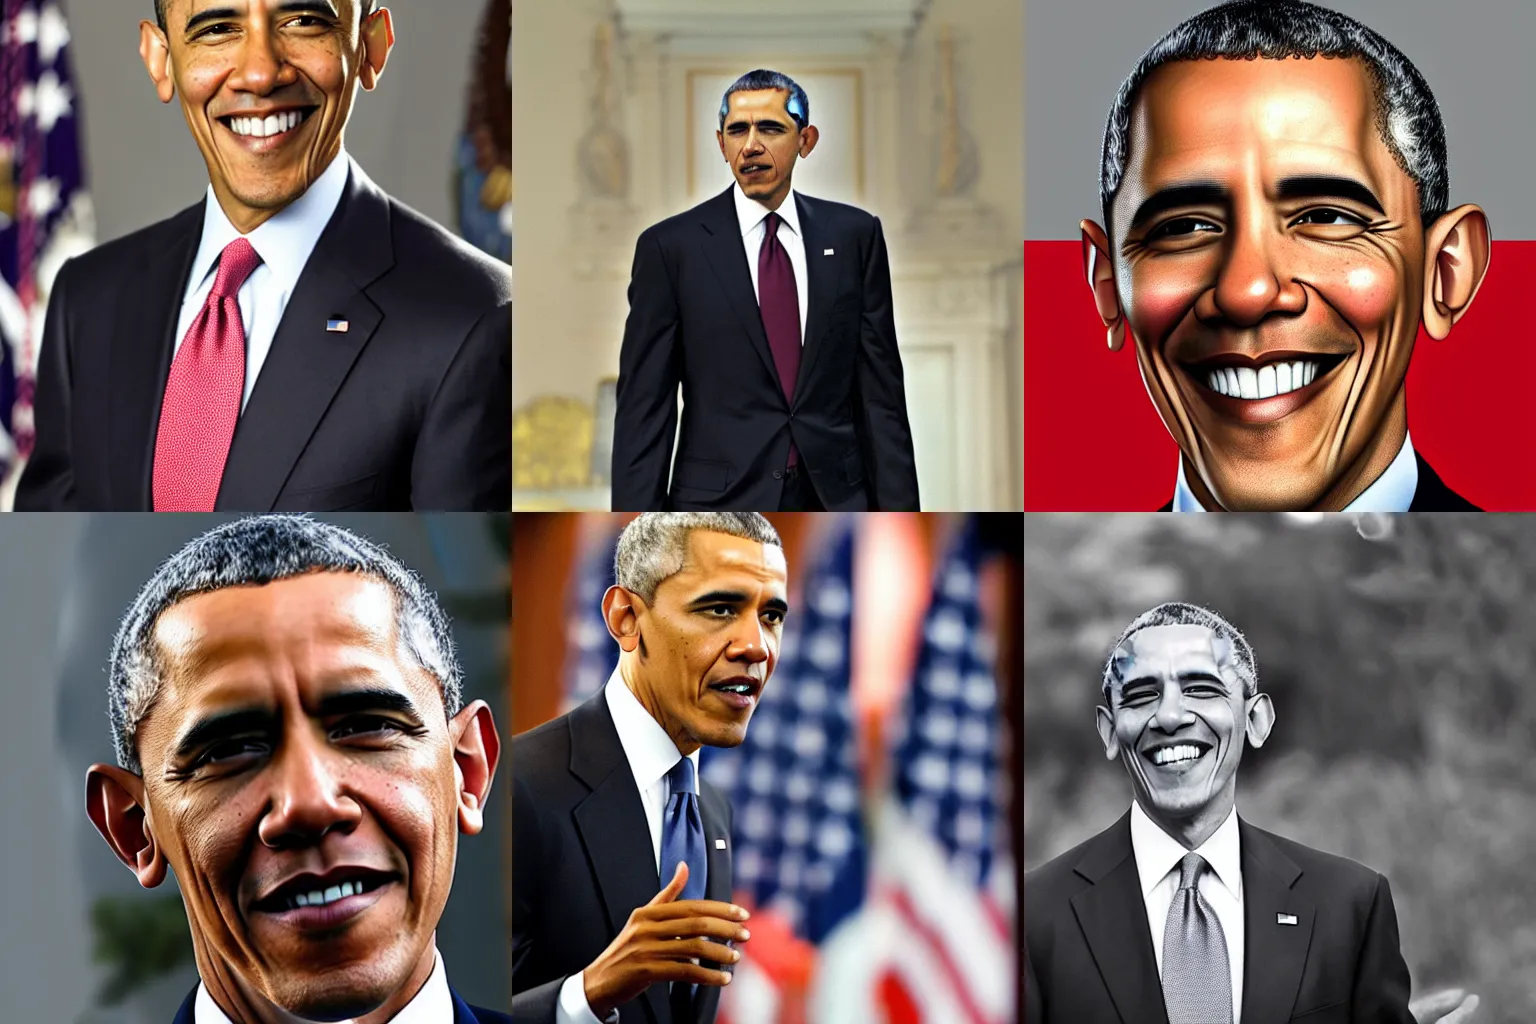 Prompt: A photograph of Barack Obama but he looks like Joe Biden